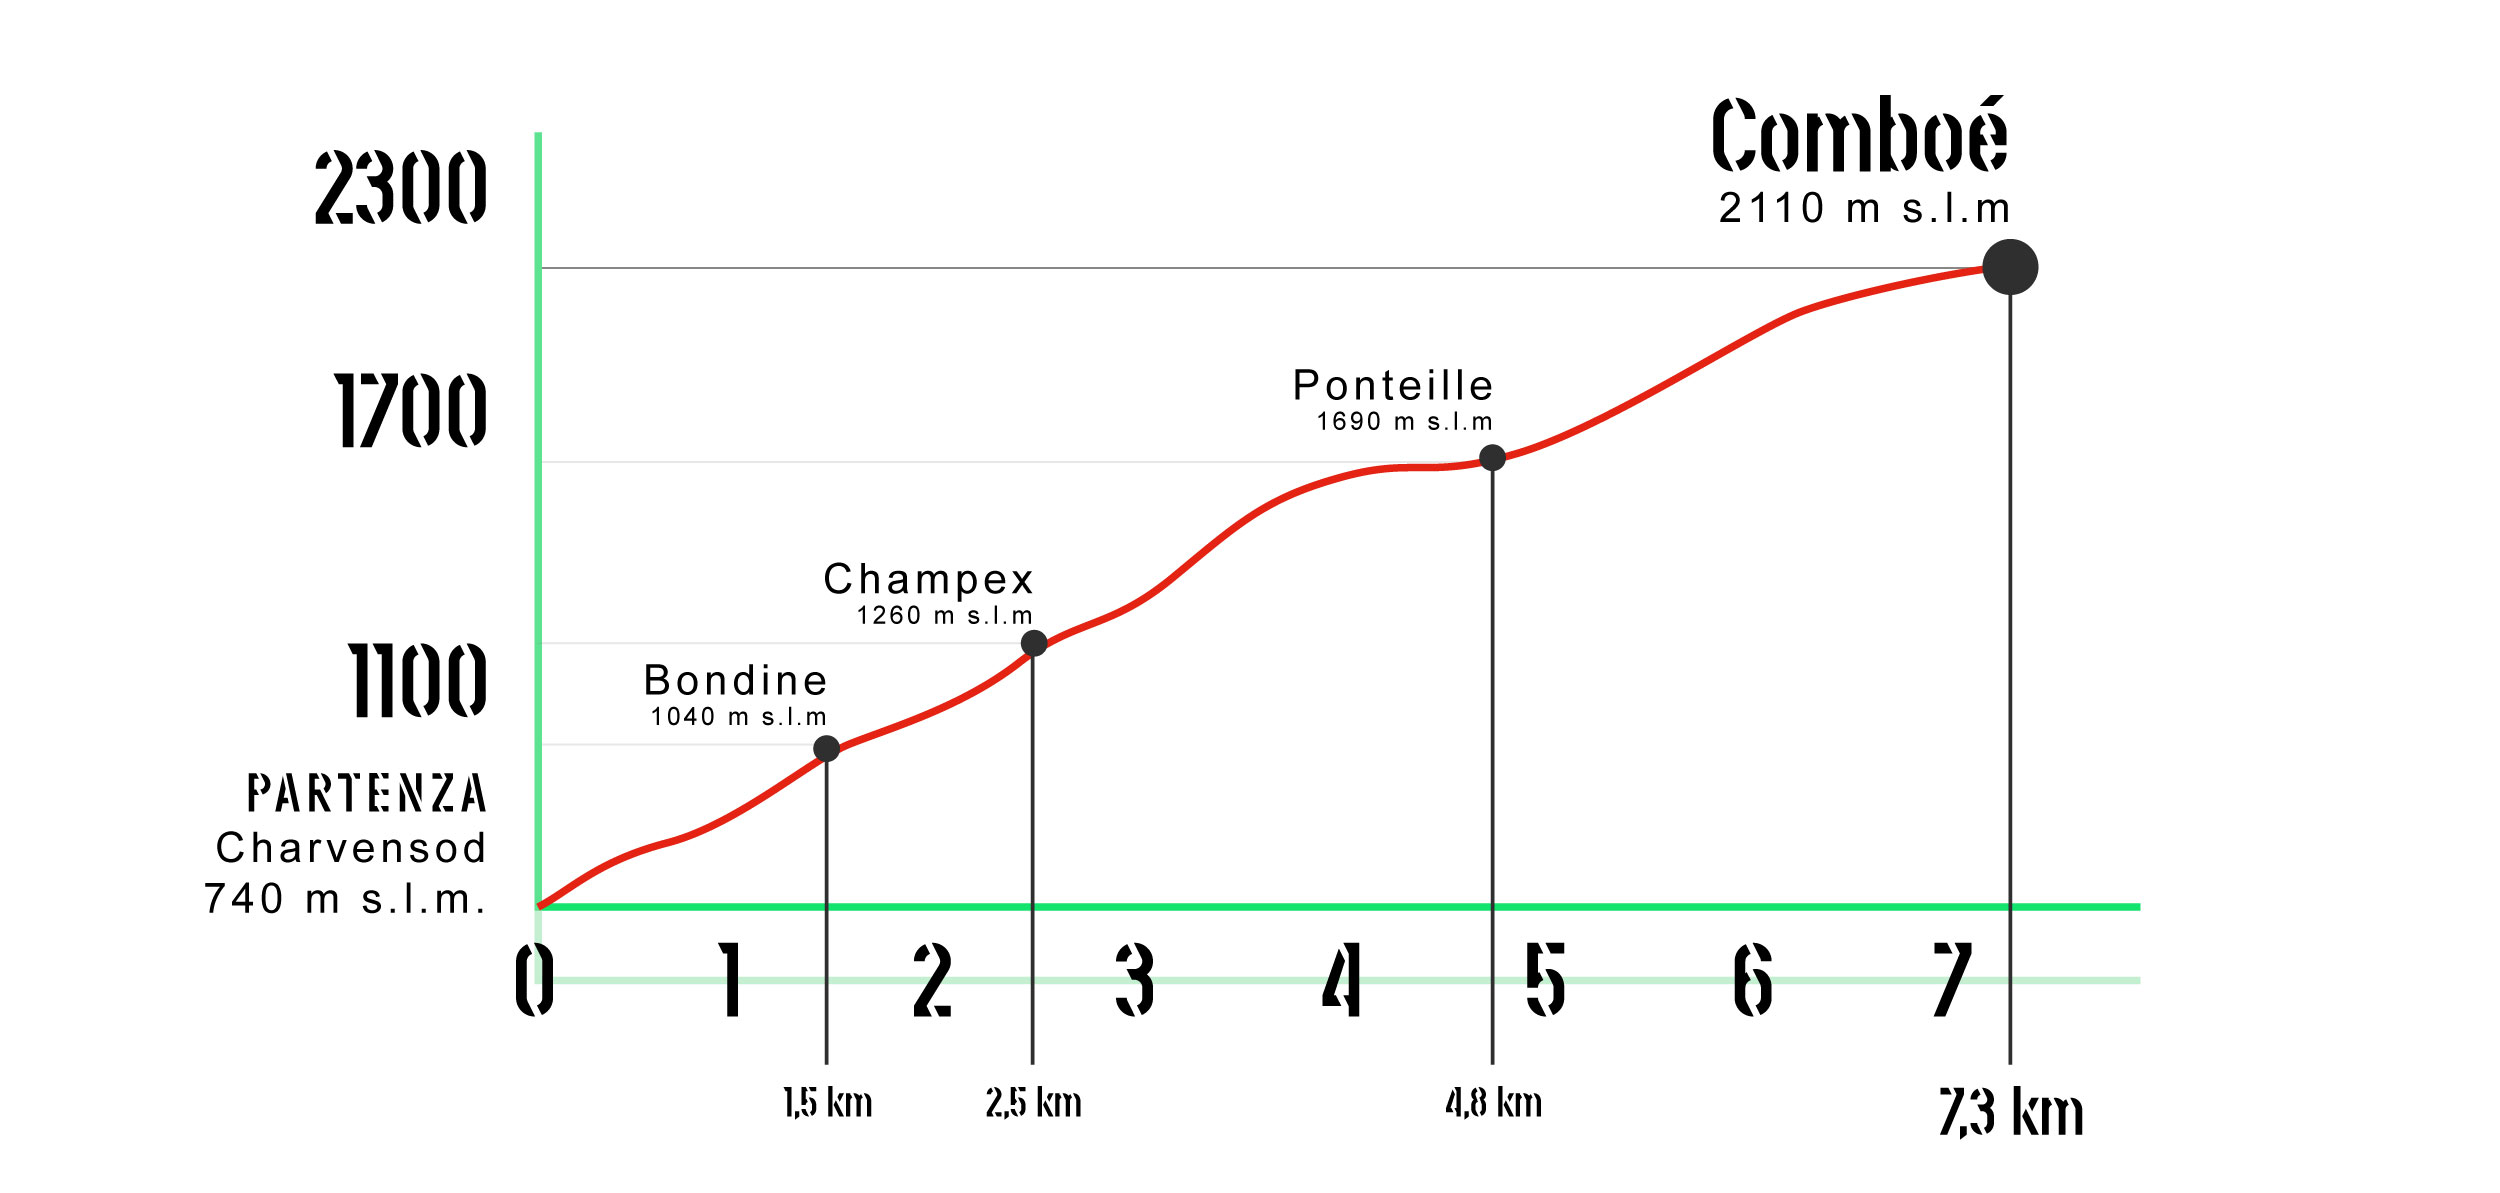 Aosta - Comboé elevation profile